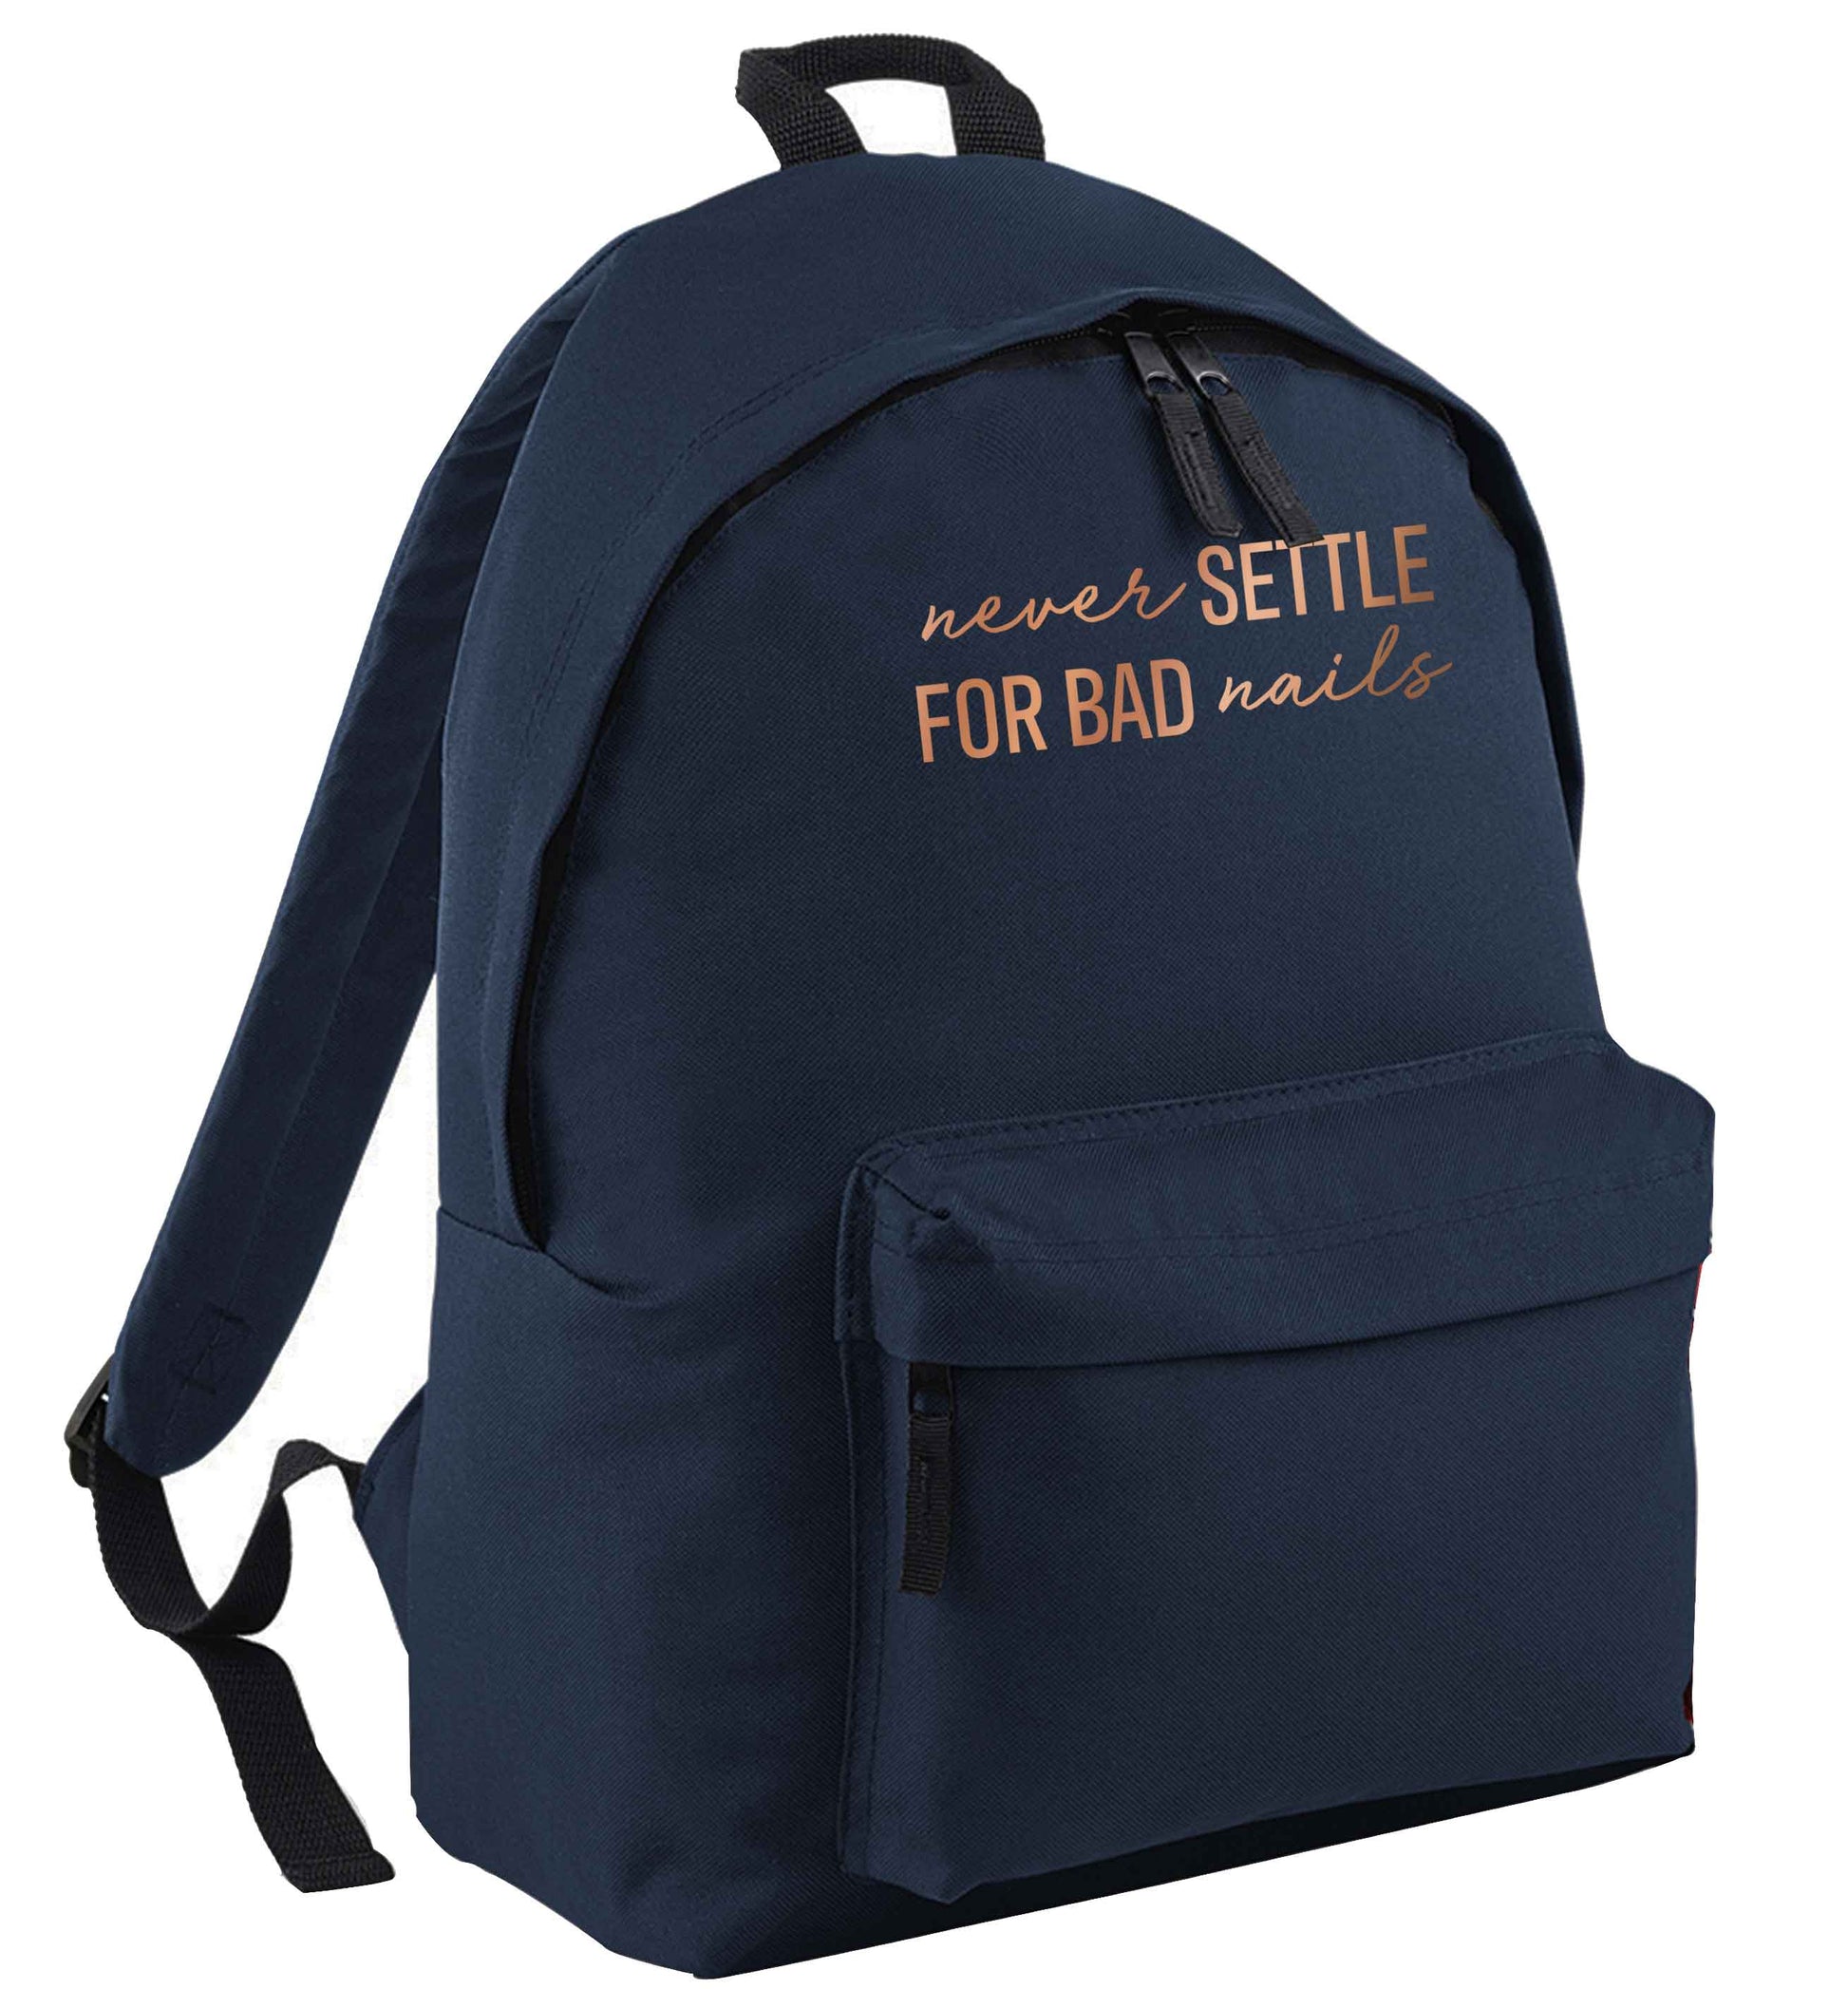 Never settle for bad nails - rose gold | Children's backpack